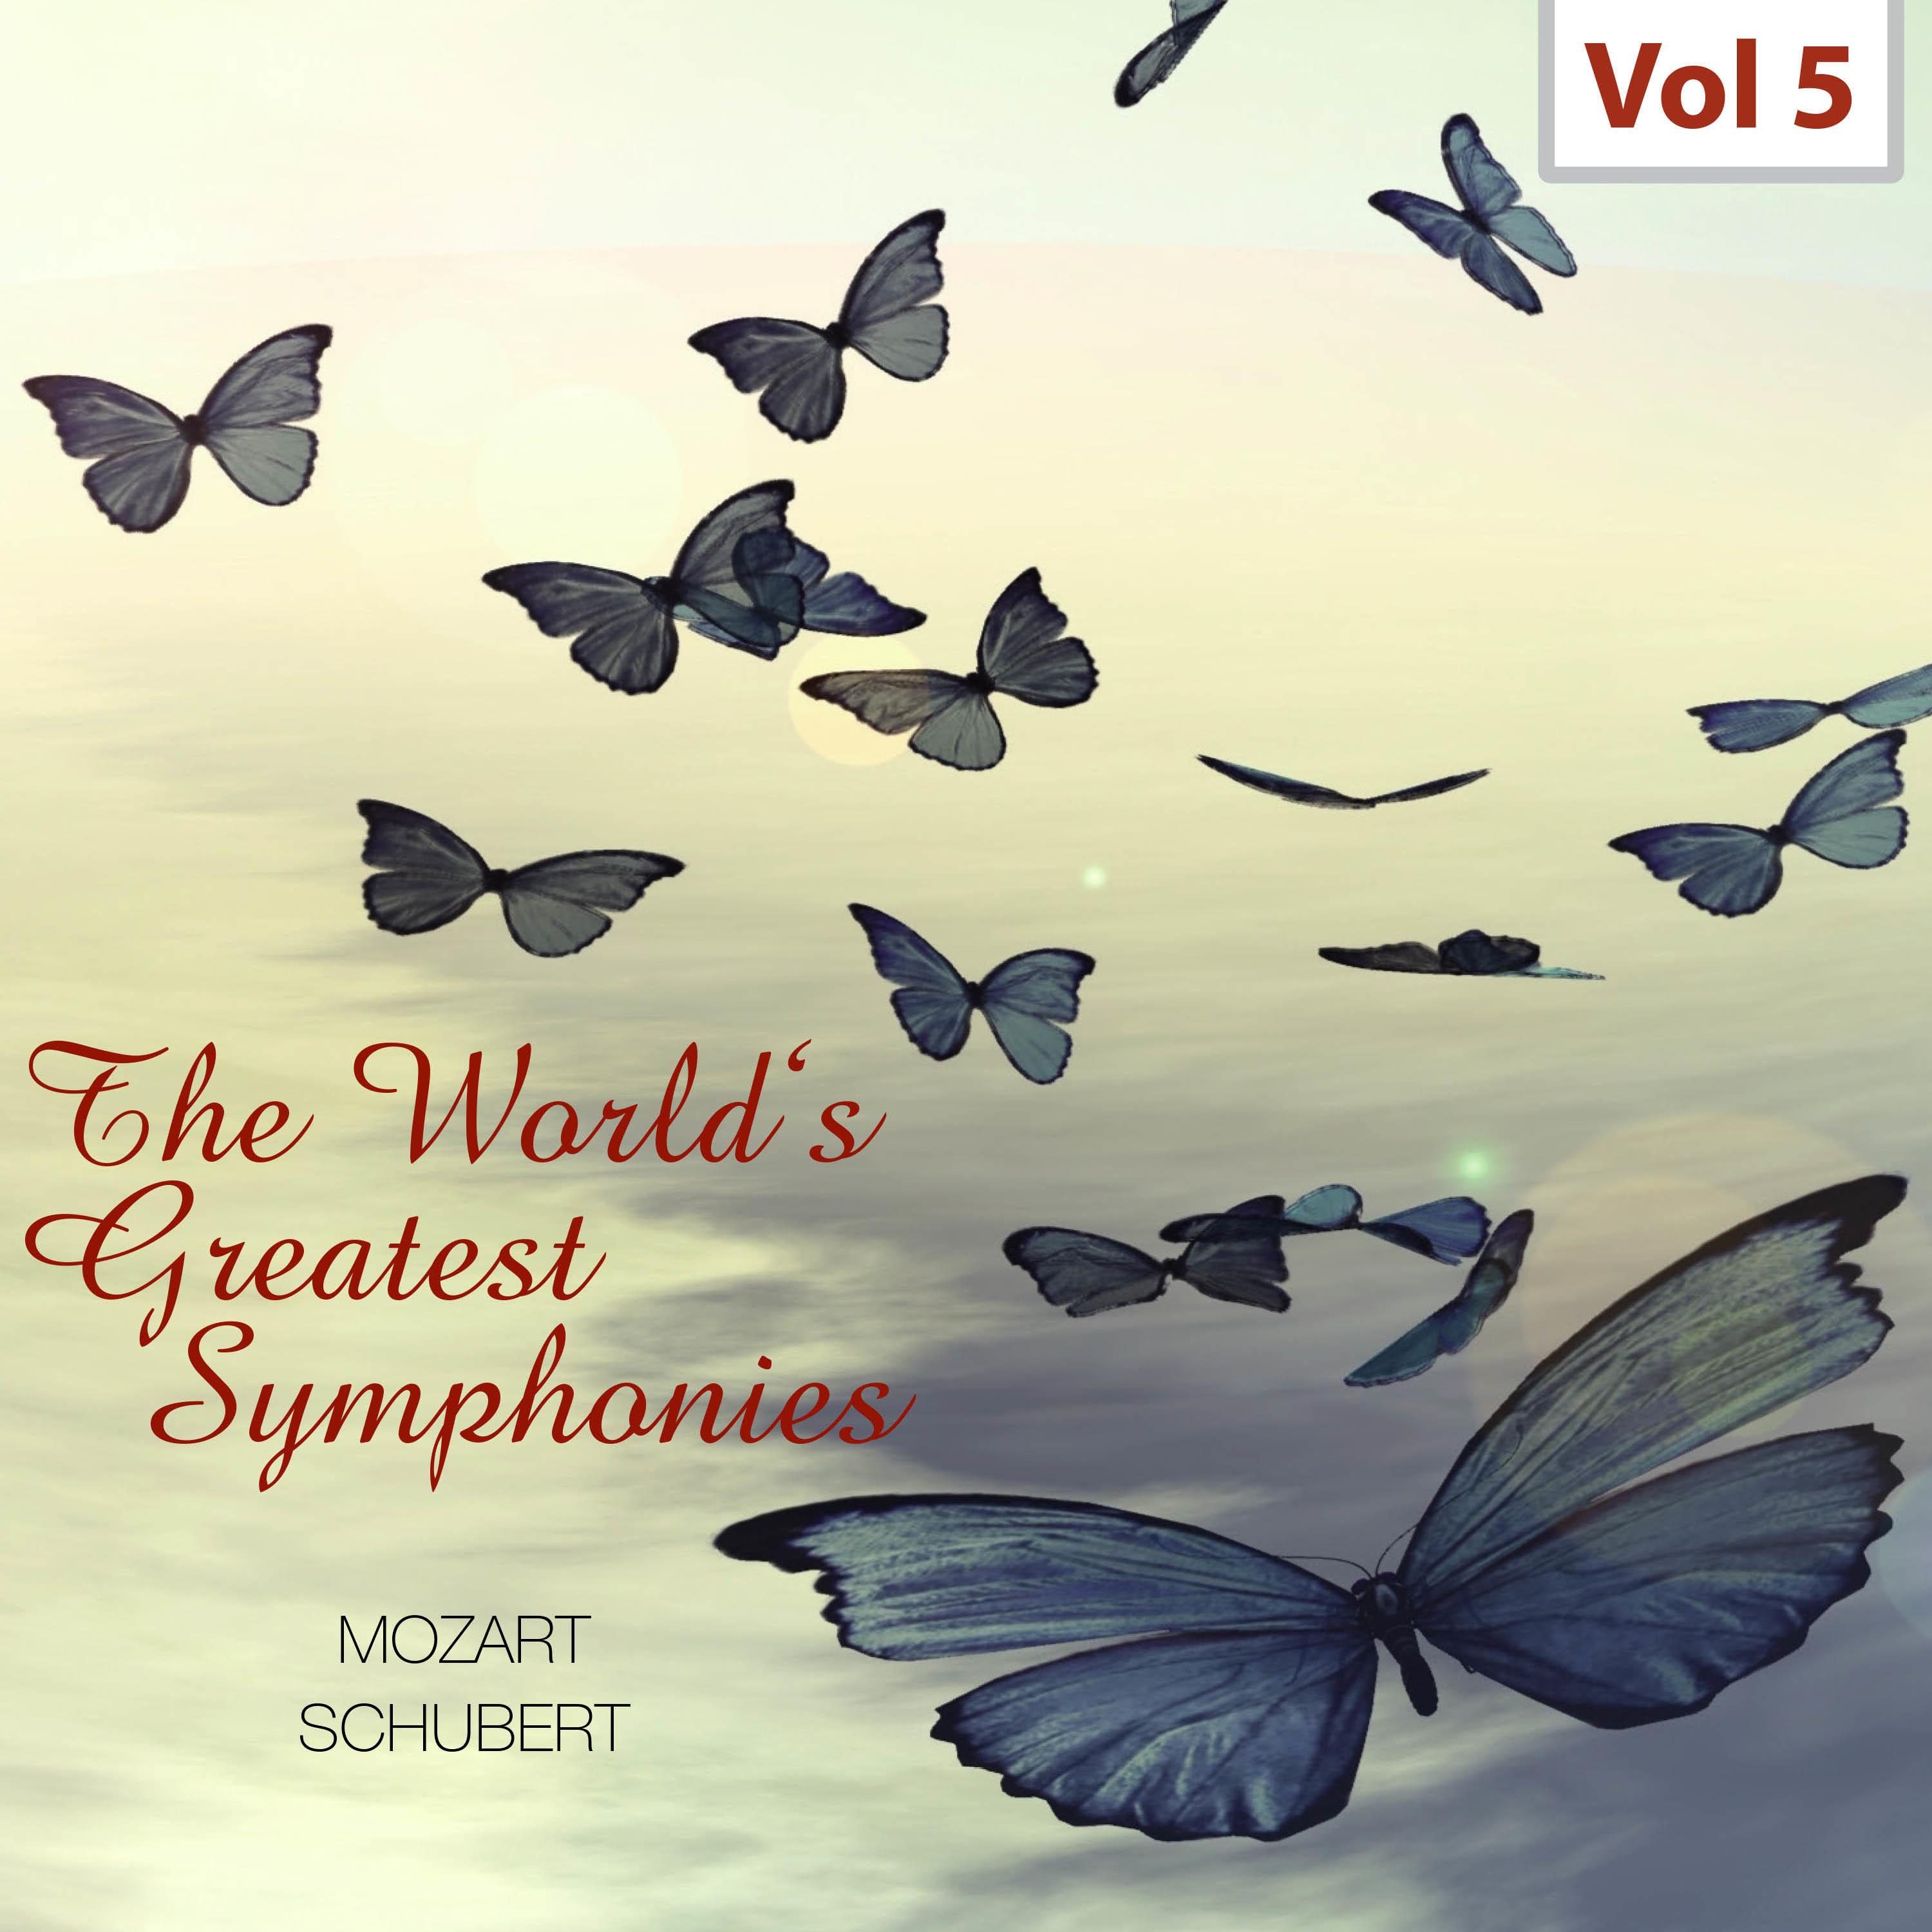 The World's Greatest Symphonies, Vol. 5